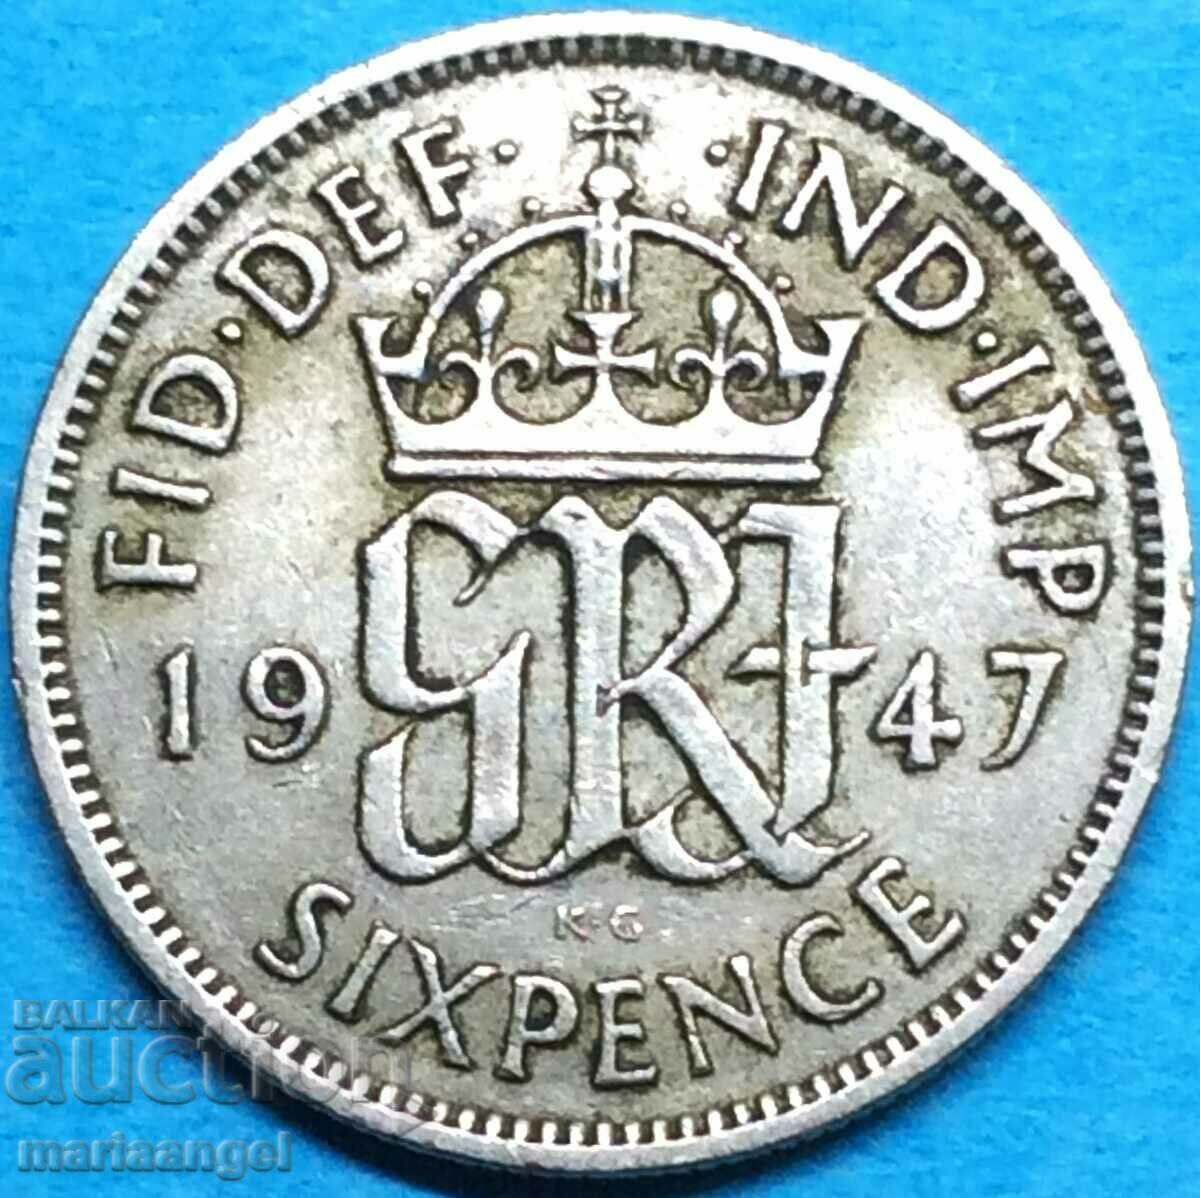 Marea Britanie 6 pence 1947 argint